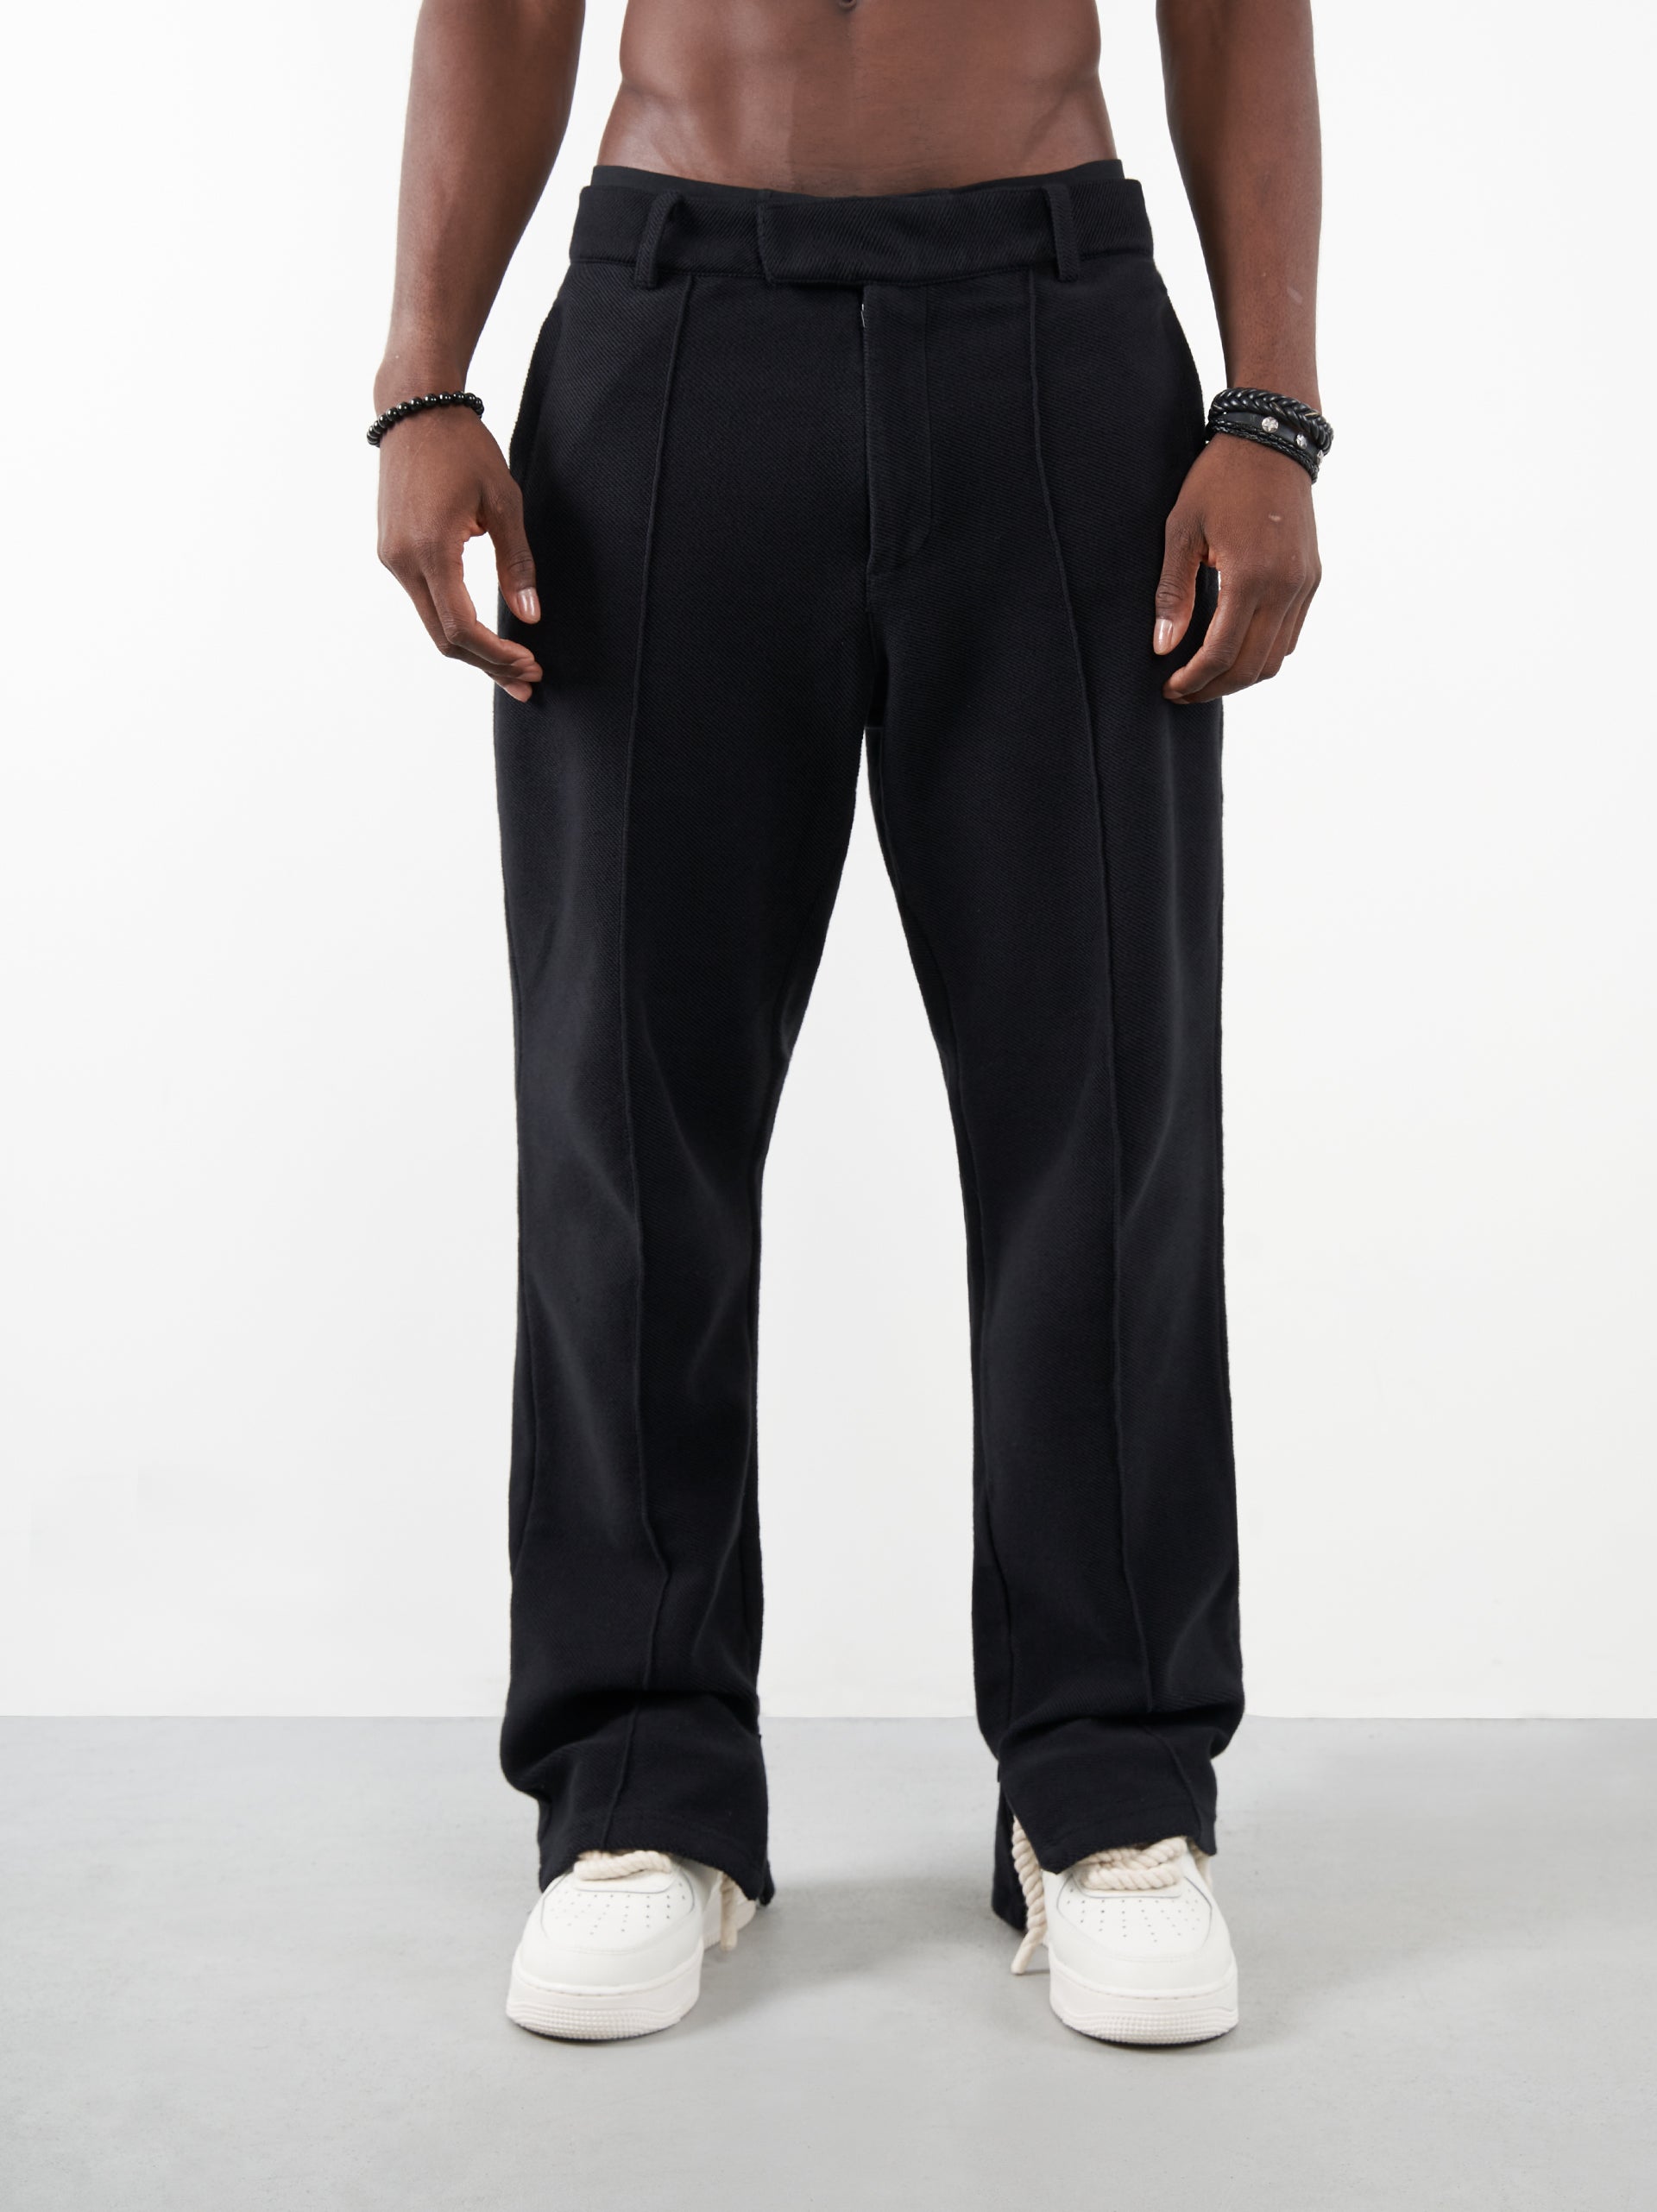 Inside Out Tailored Pants - Black - DENNIS DANIEL™